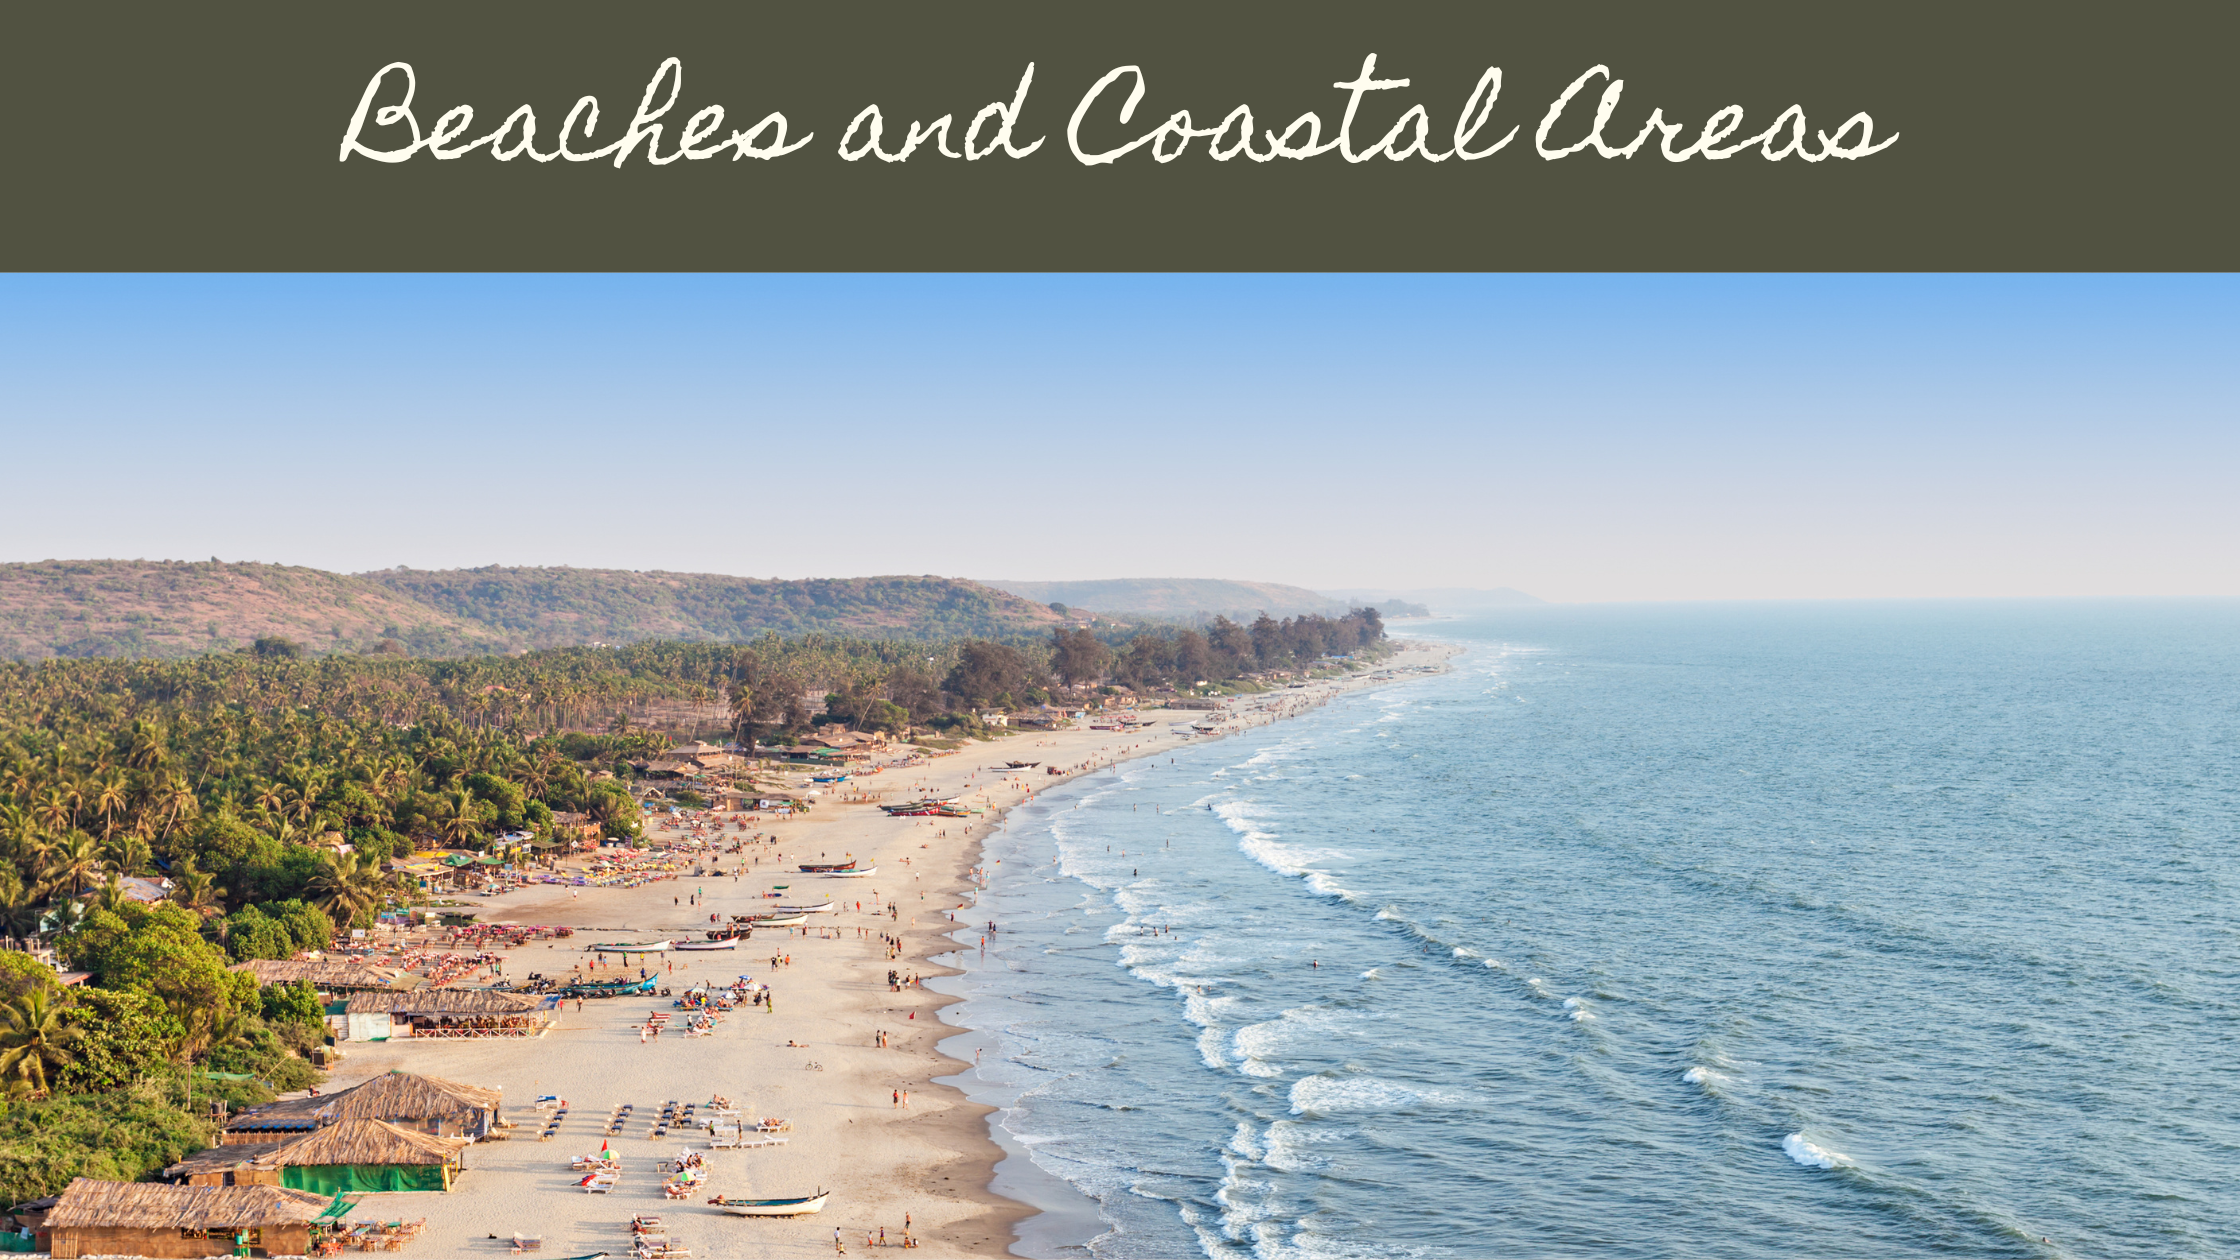 Location 1: Beaches and Coastal Areas